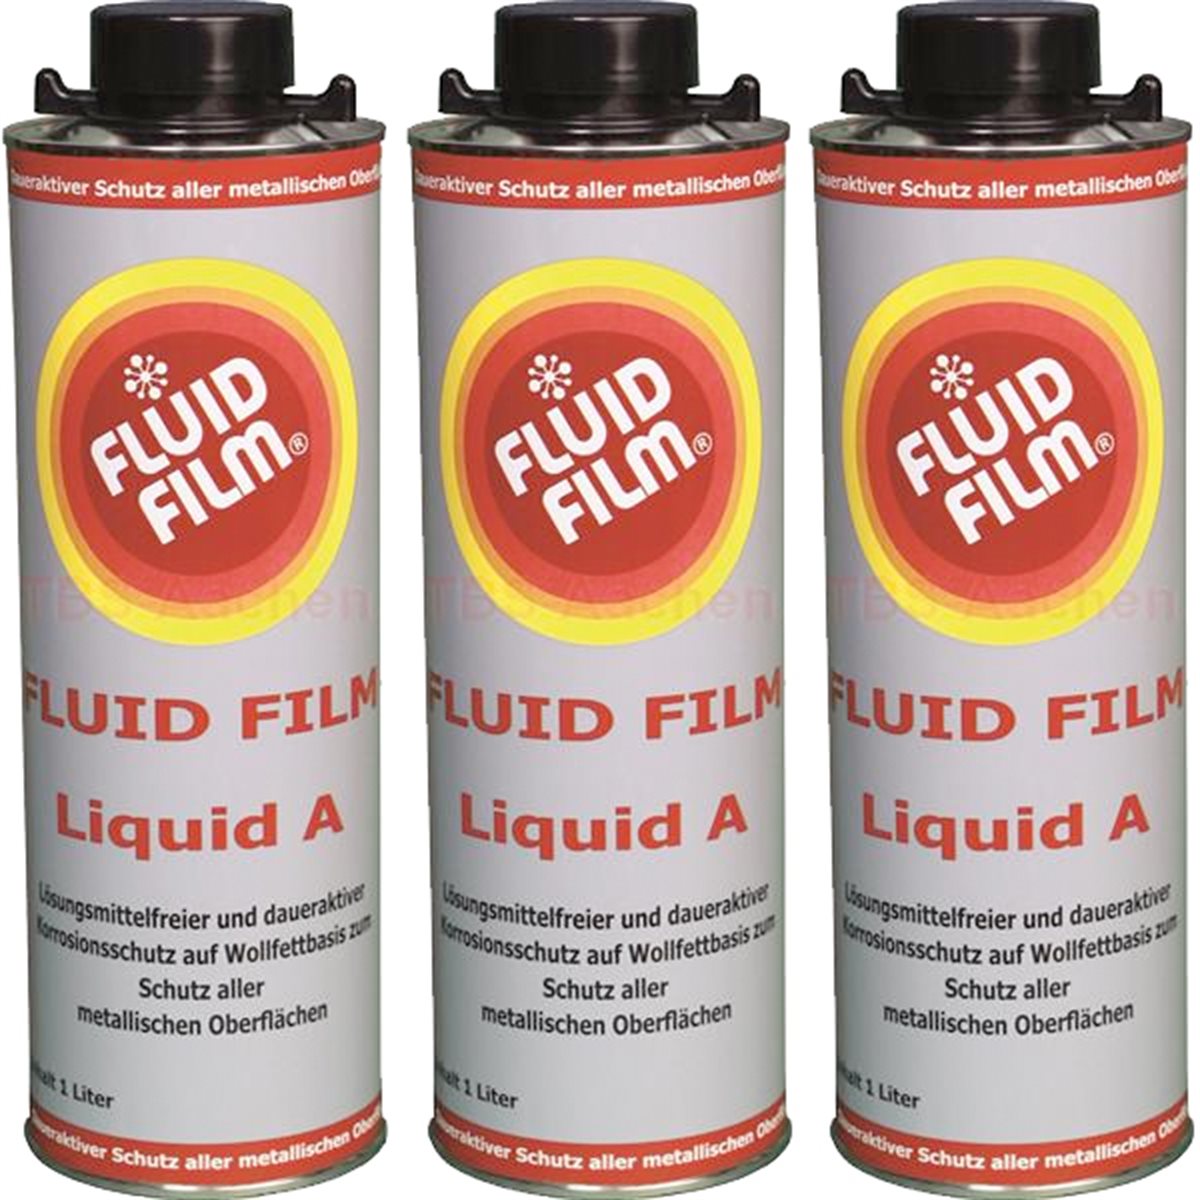 fluid film spray kit